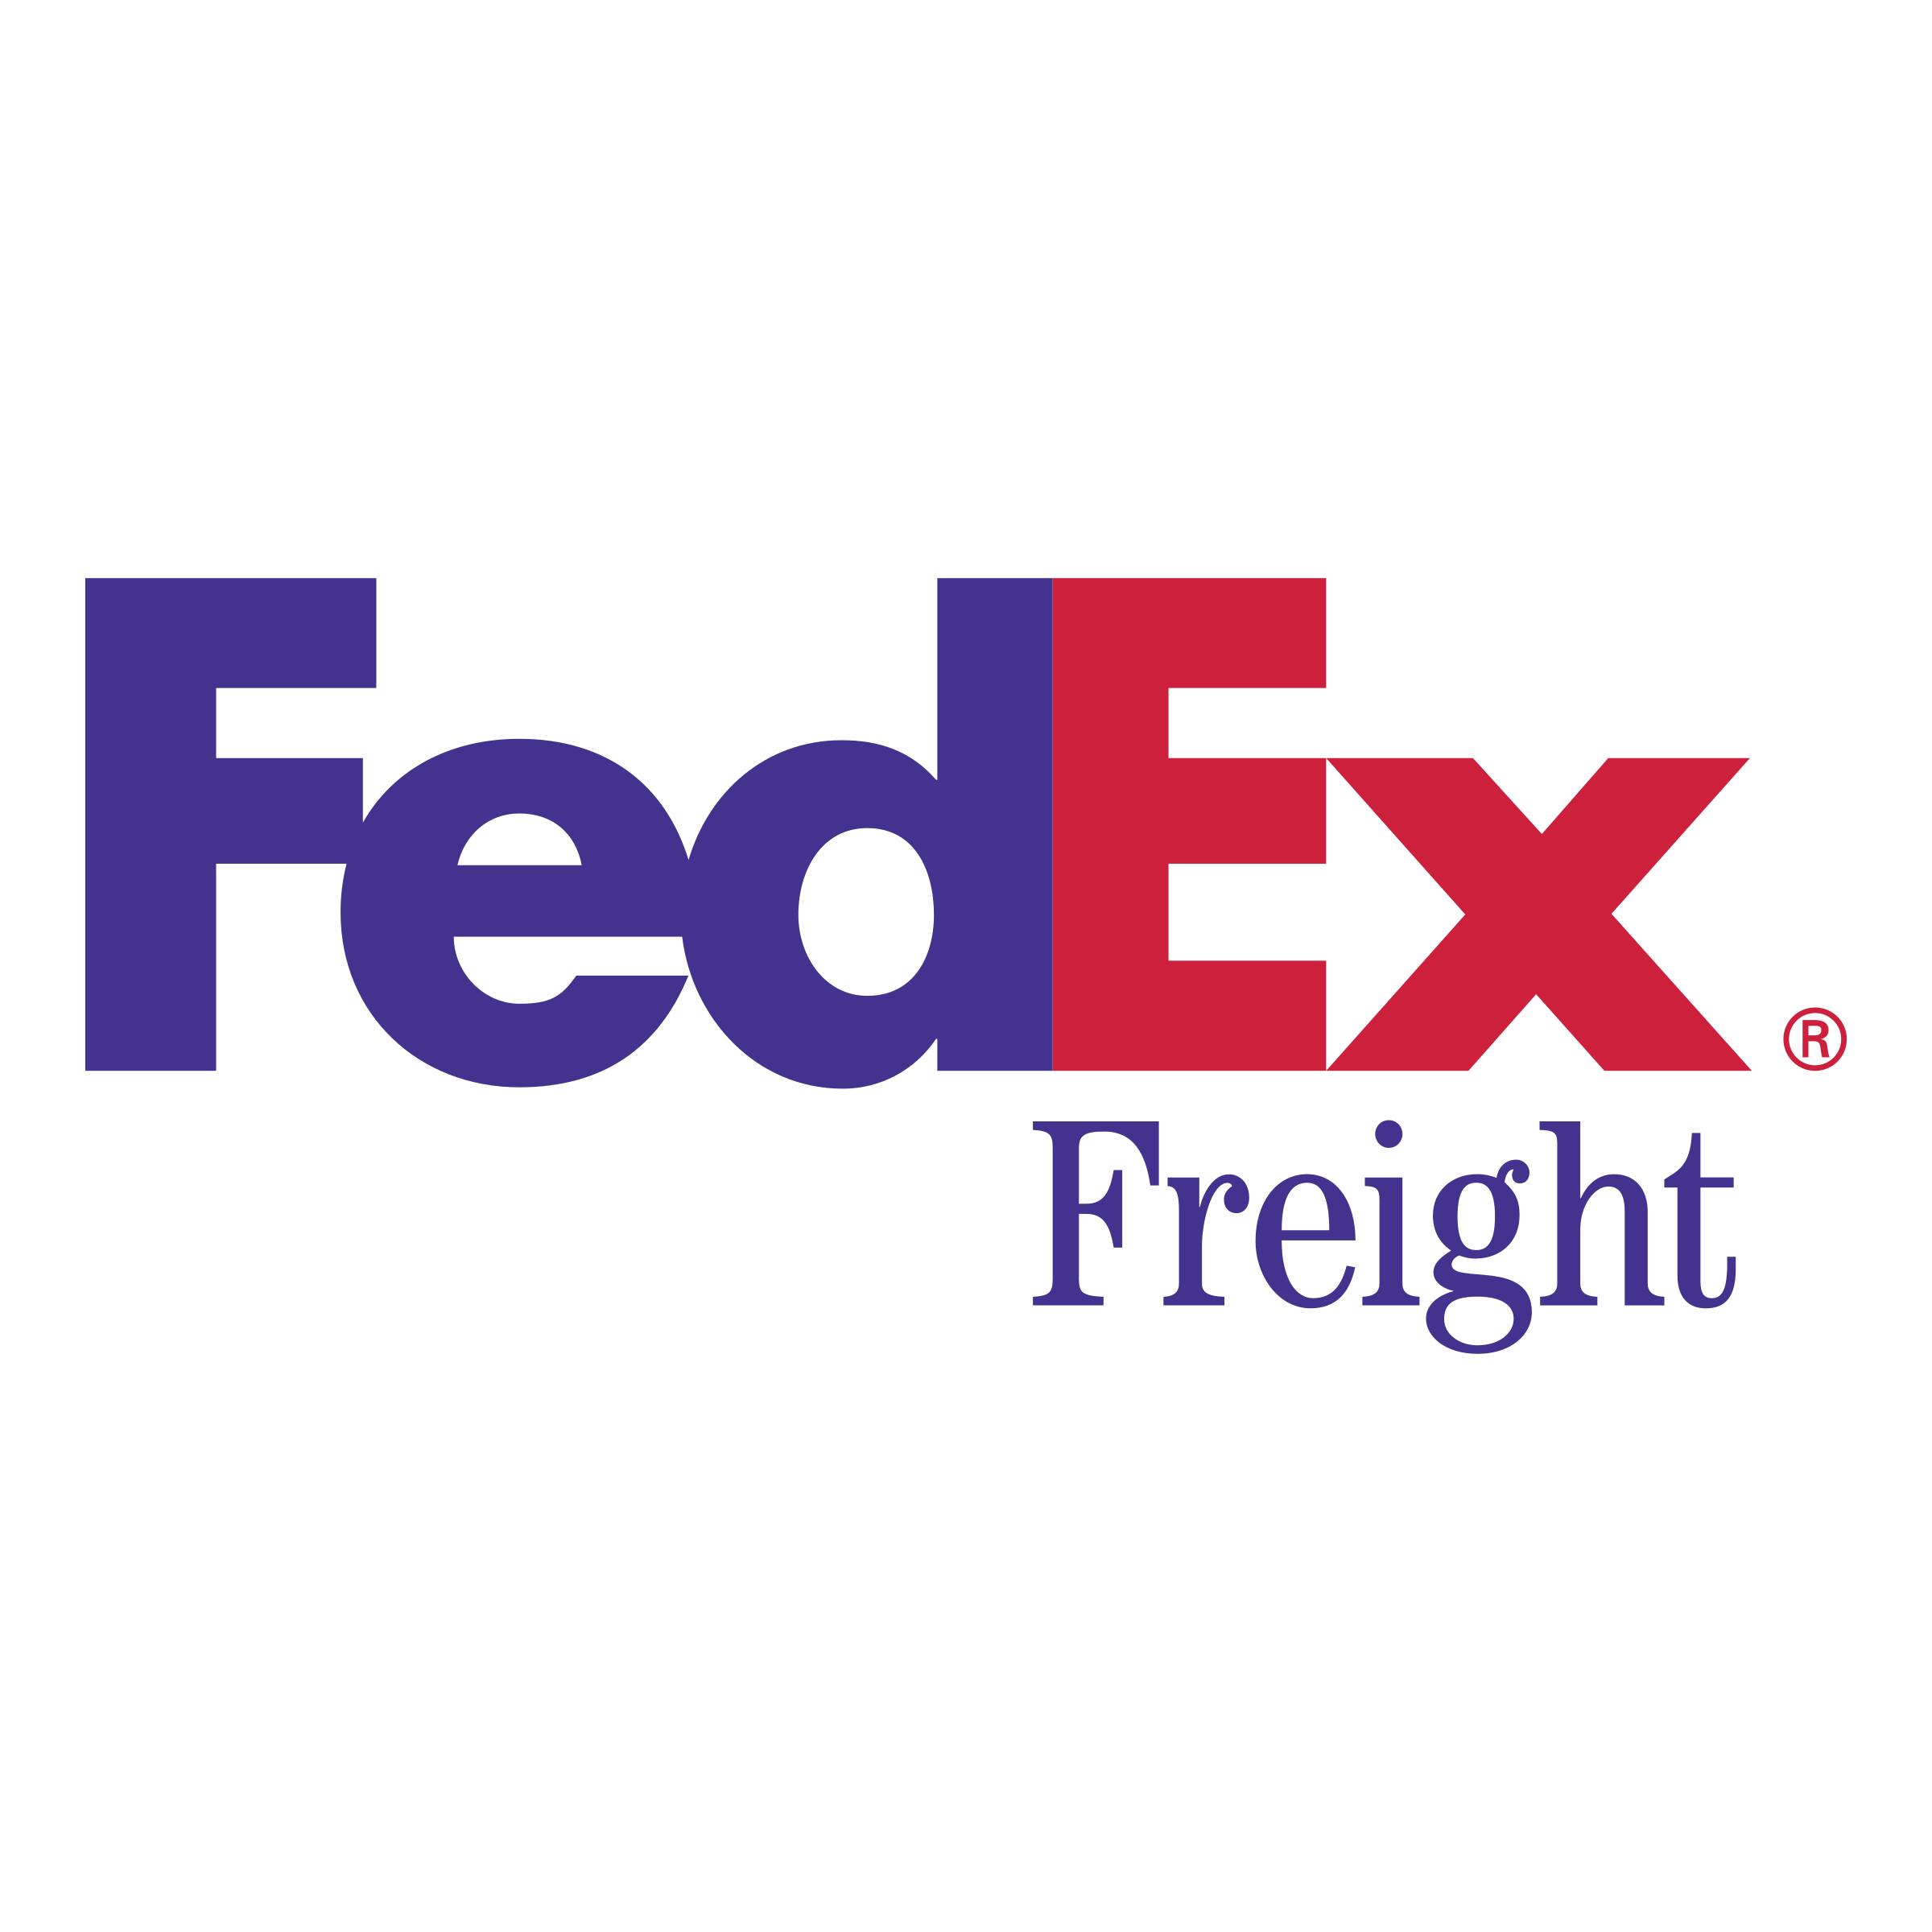 Freight Logo - FedEx Freight Logo PNG Transparent & SVG Vector - Freebie Supply